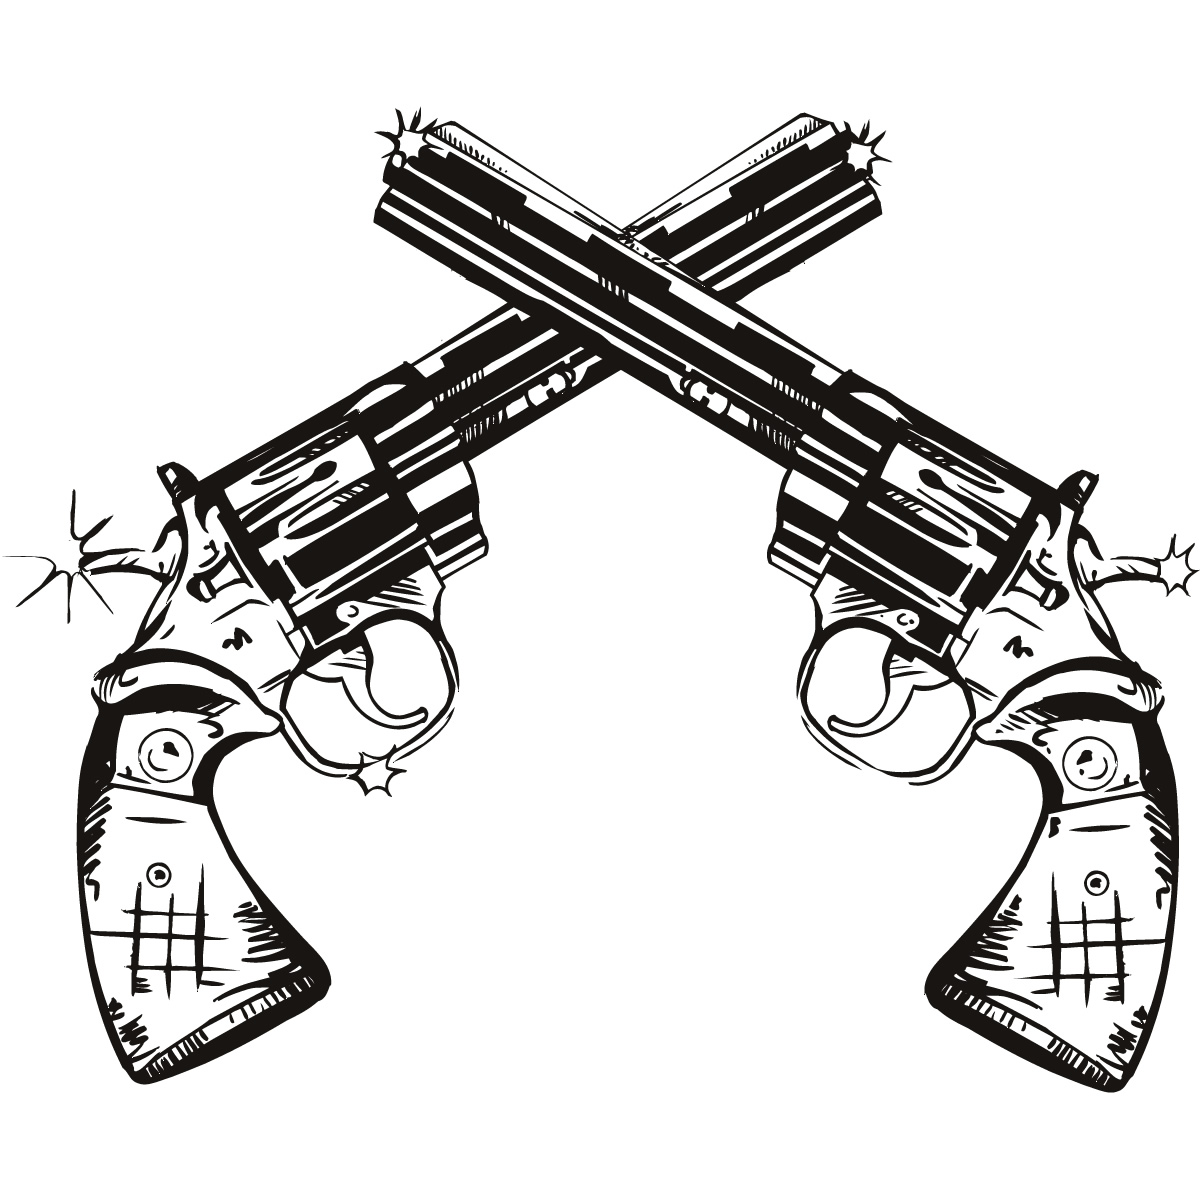 pistol clipart western gun